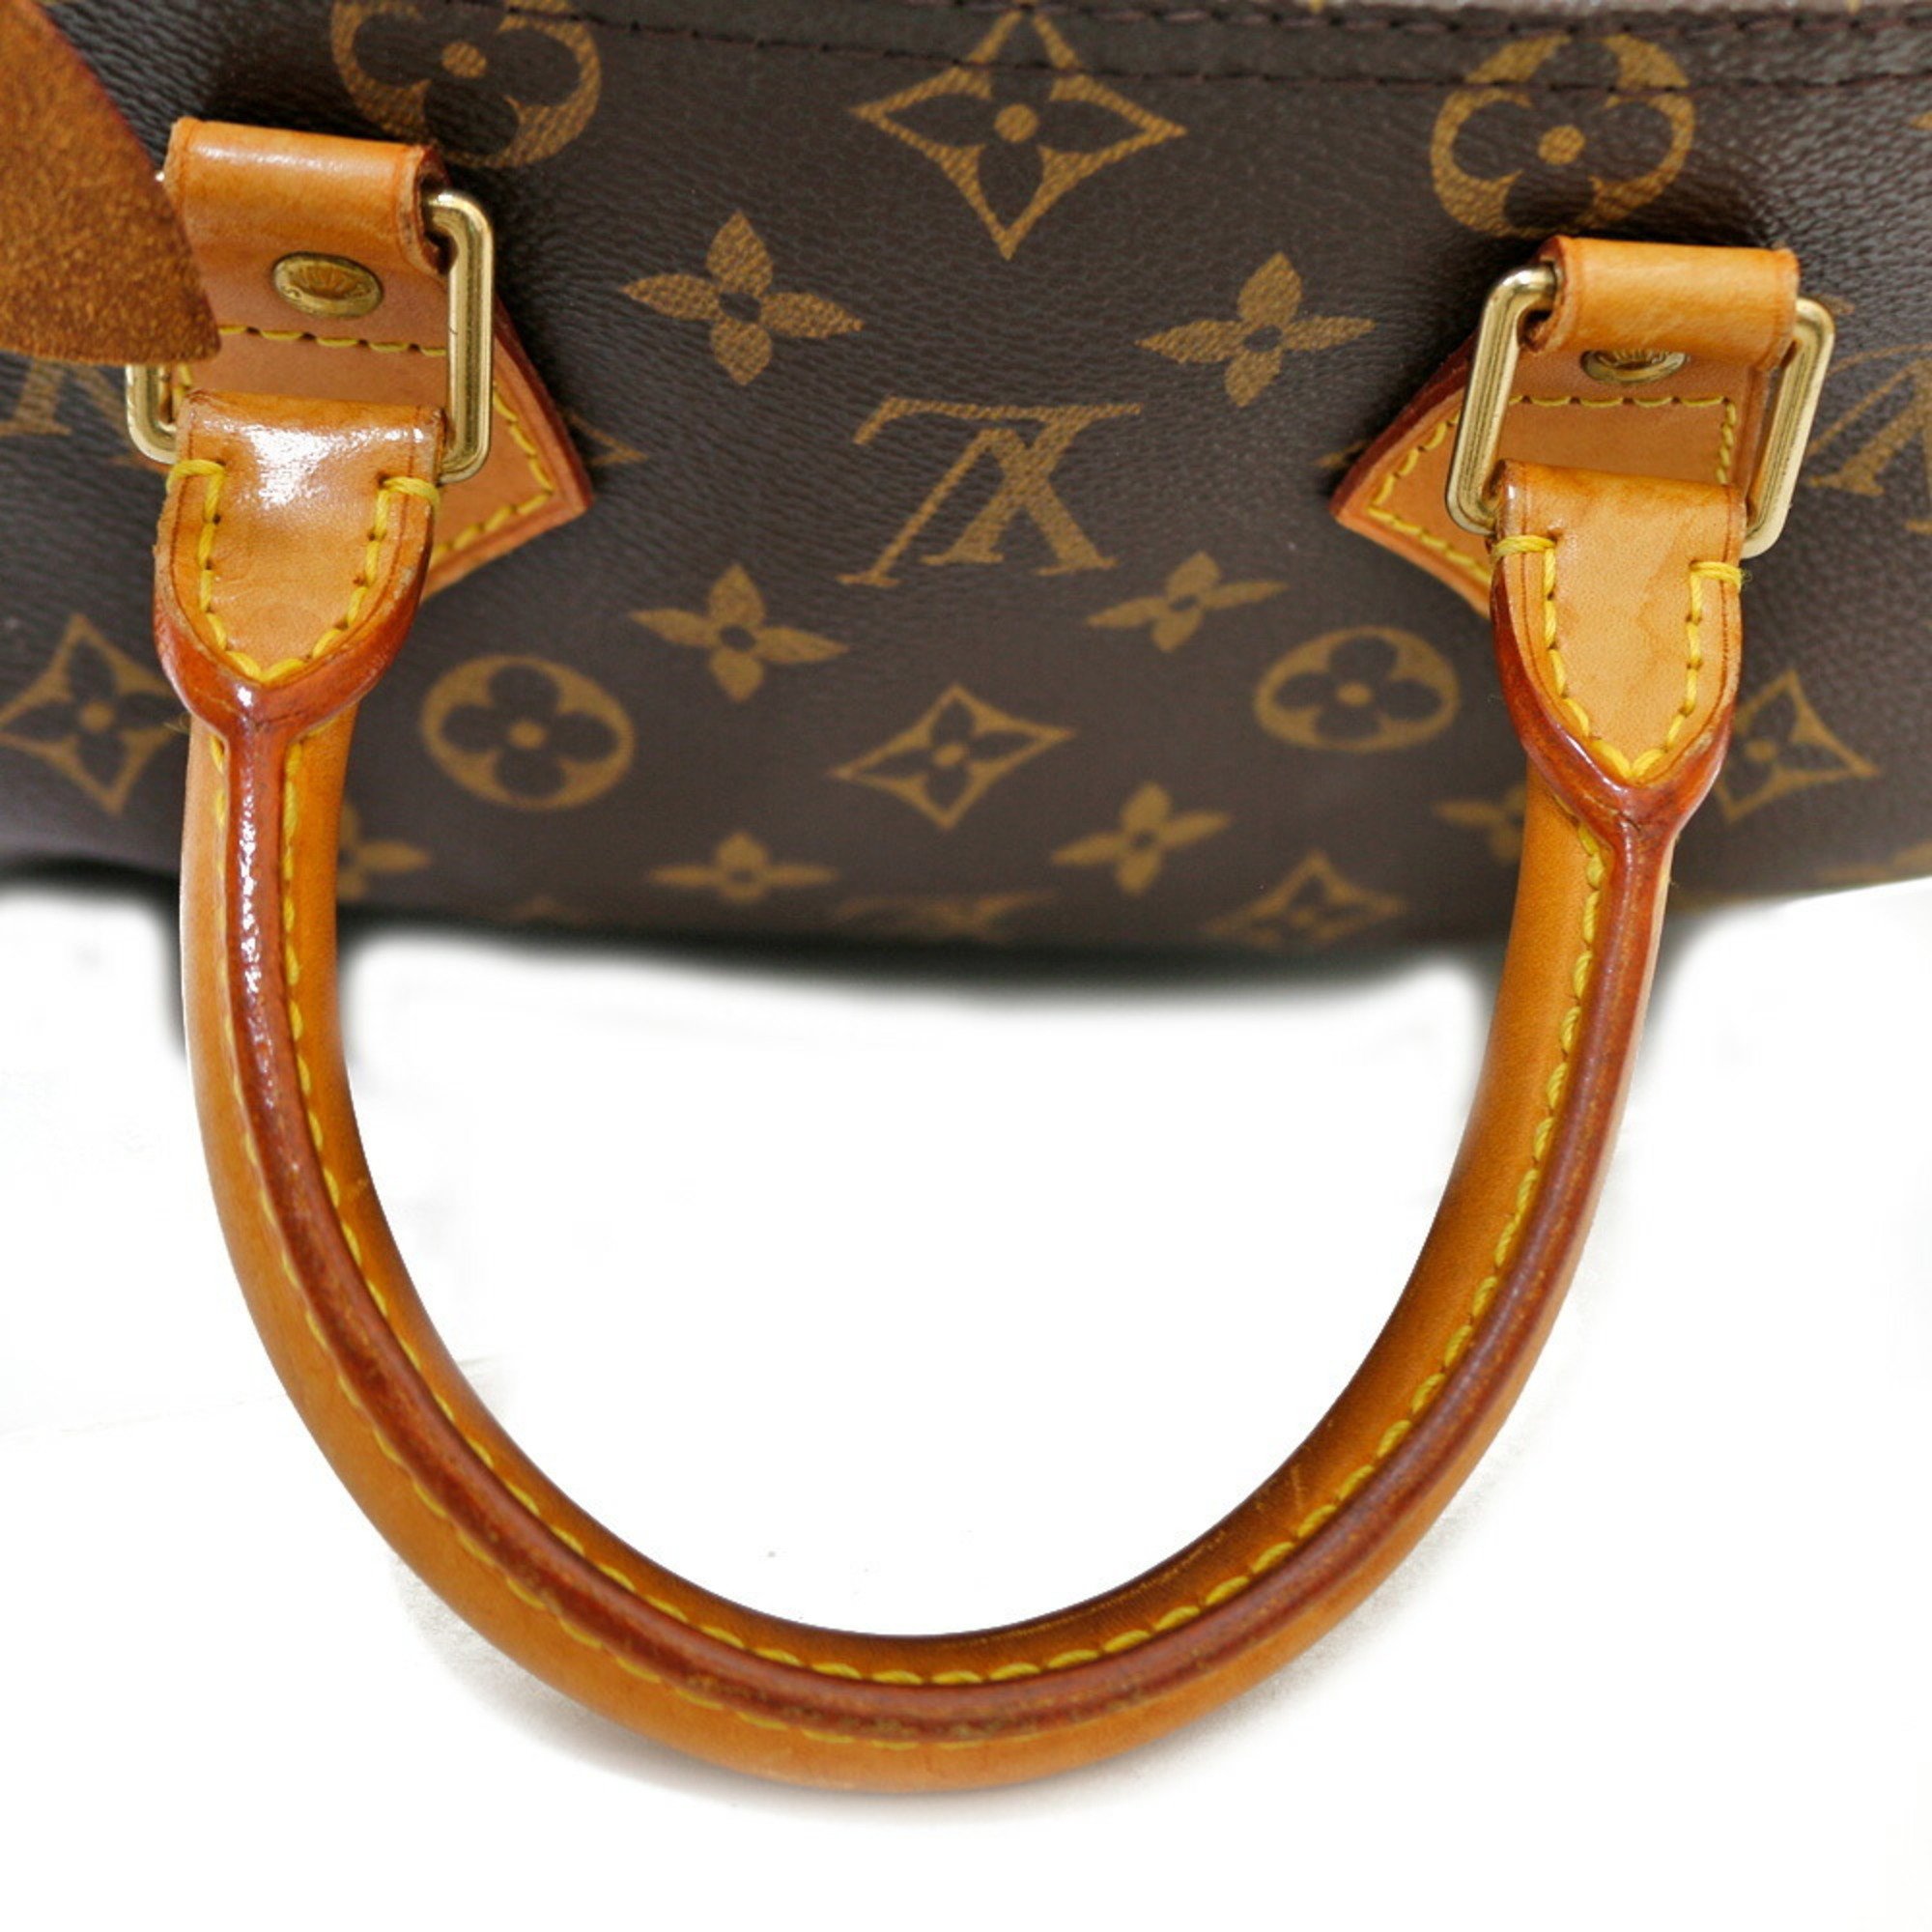 Louis Vuitton Monogram Speedy 25 Handbag Canvas M41528 Brown Women's LOUIS VUITTON BRB01000000001997